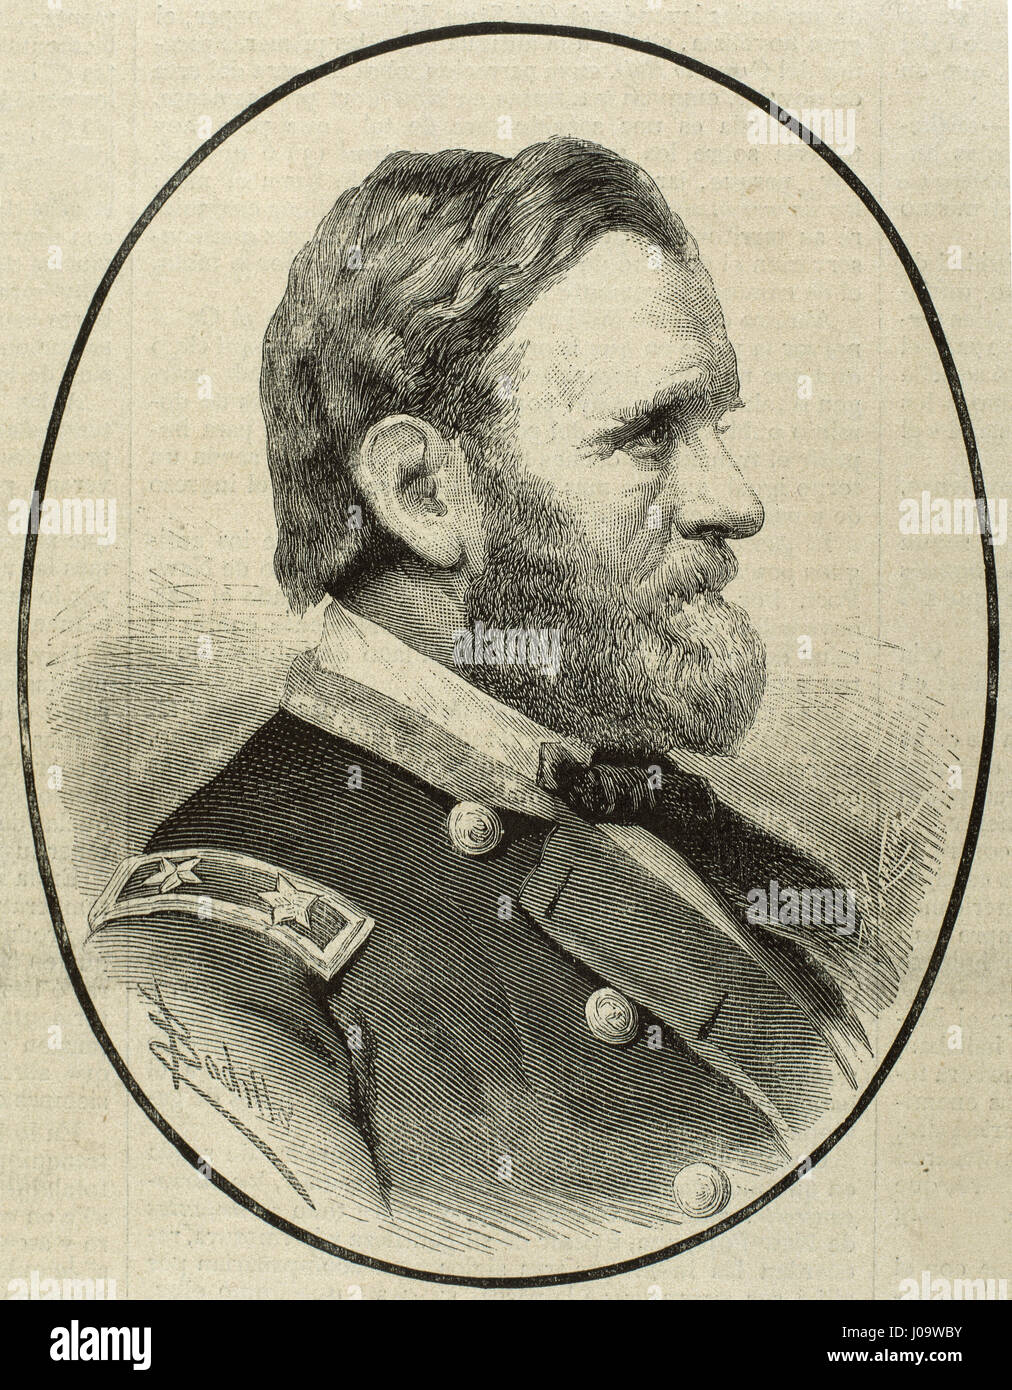 Ulysses S. Grant (1822-1885). Militär und North American Politiker. 18. Präsident der USA (1869-1877). Porträt. Kupferstich, 1855. Stockfoto